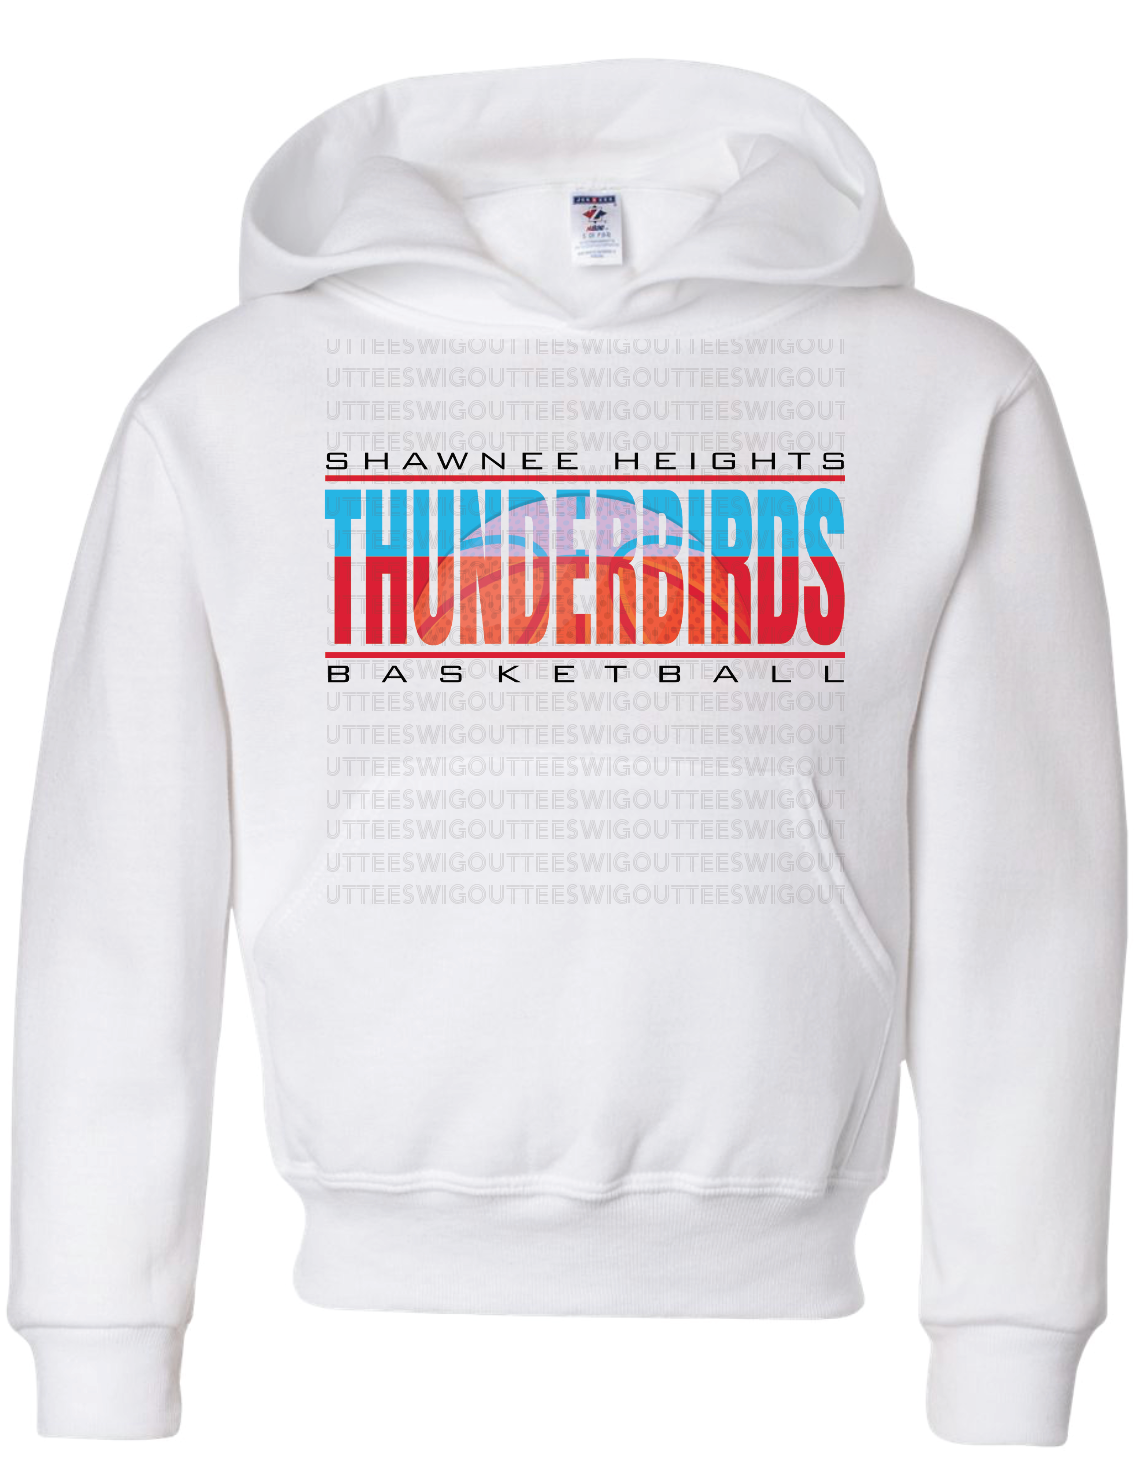 Shawnee Heights High School Basketball Jerzees Nublend Hooded Sweatshirt